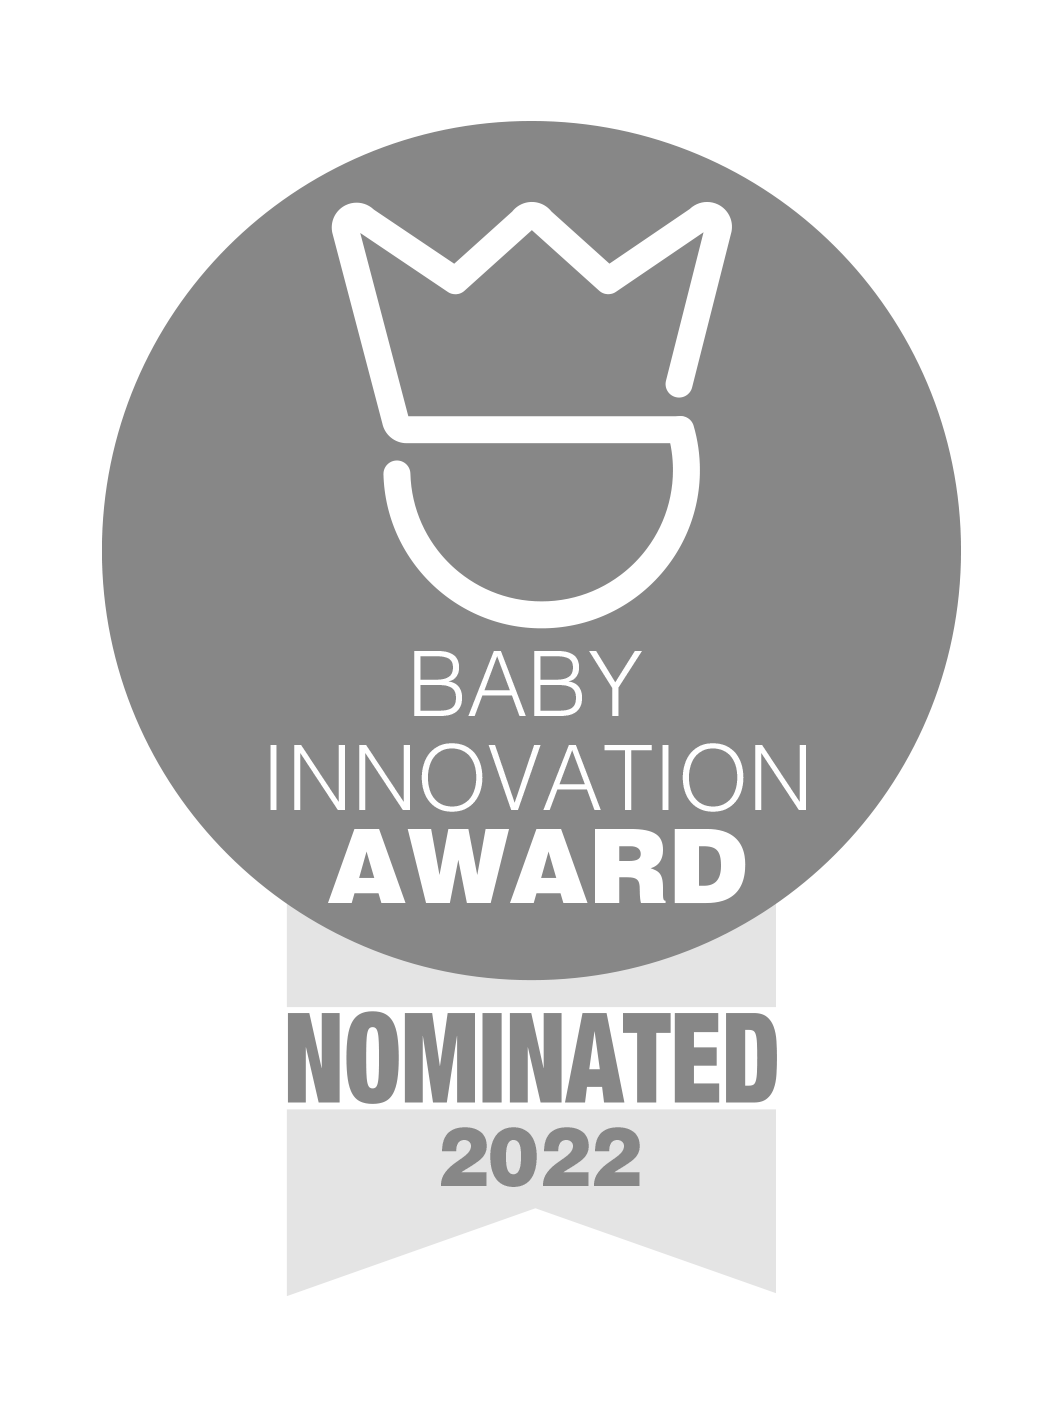 baby innovation award nominated 2022